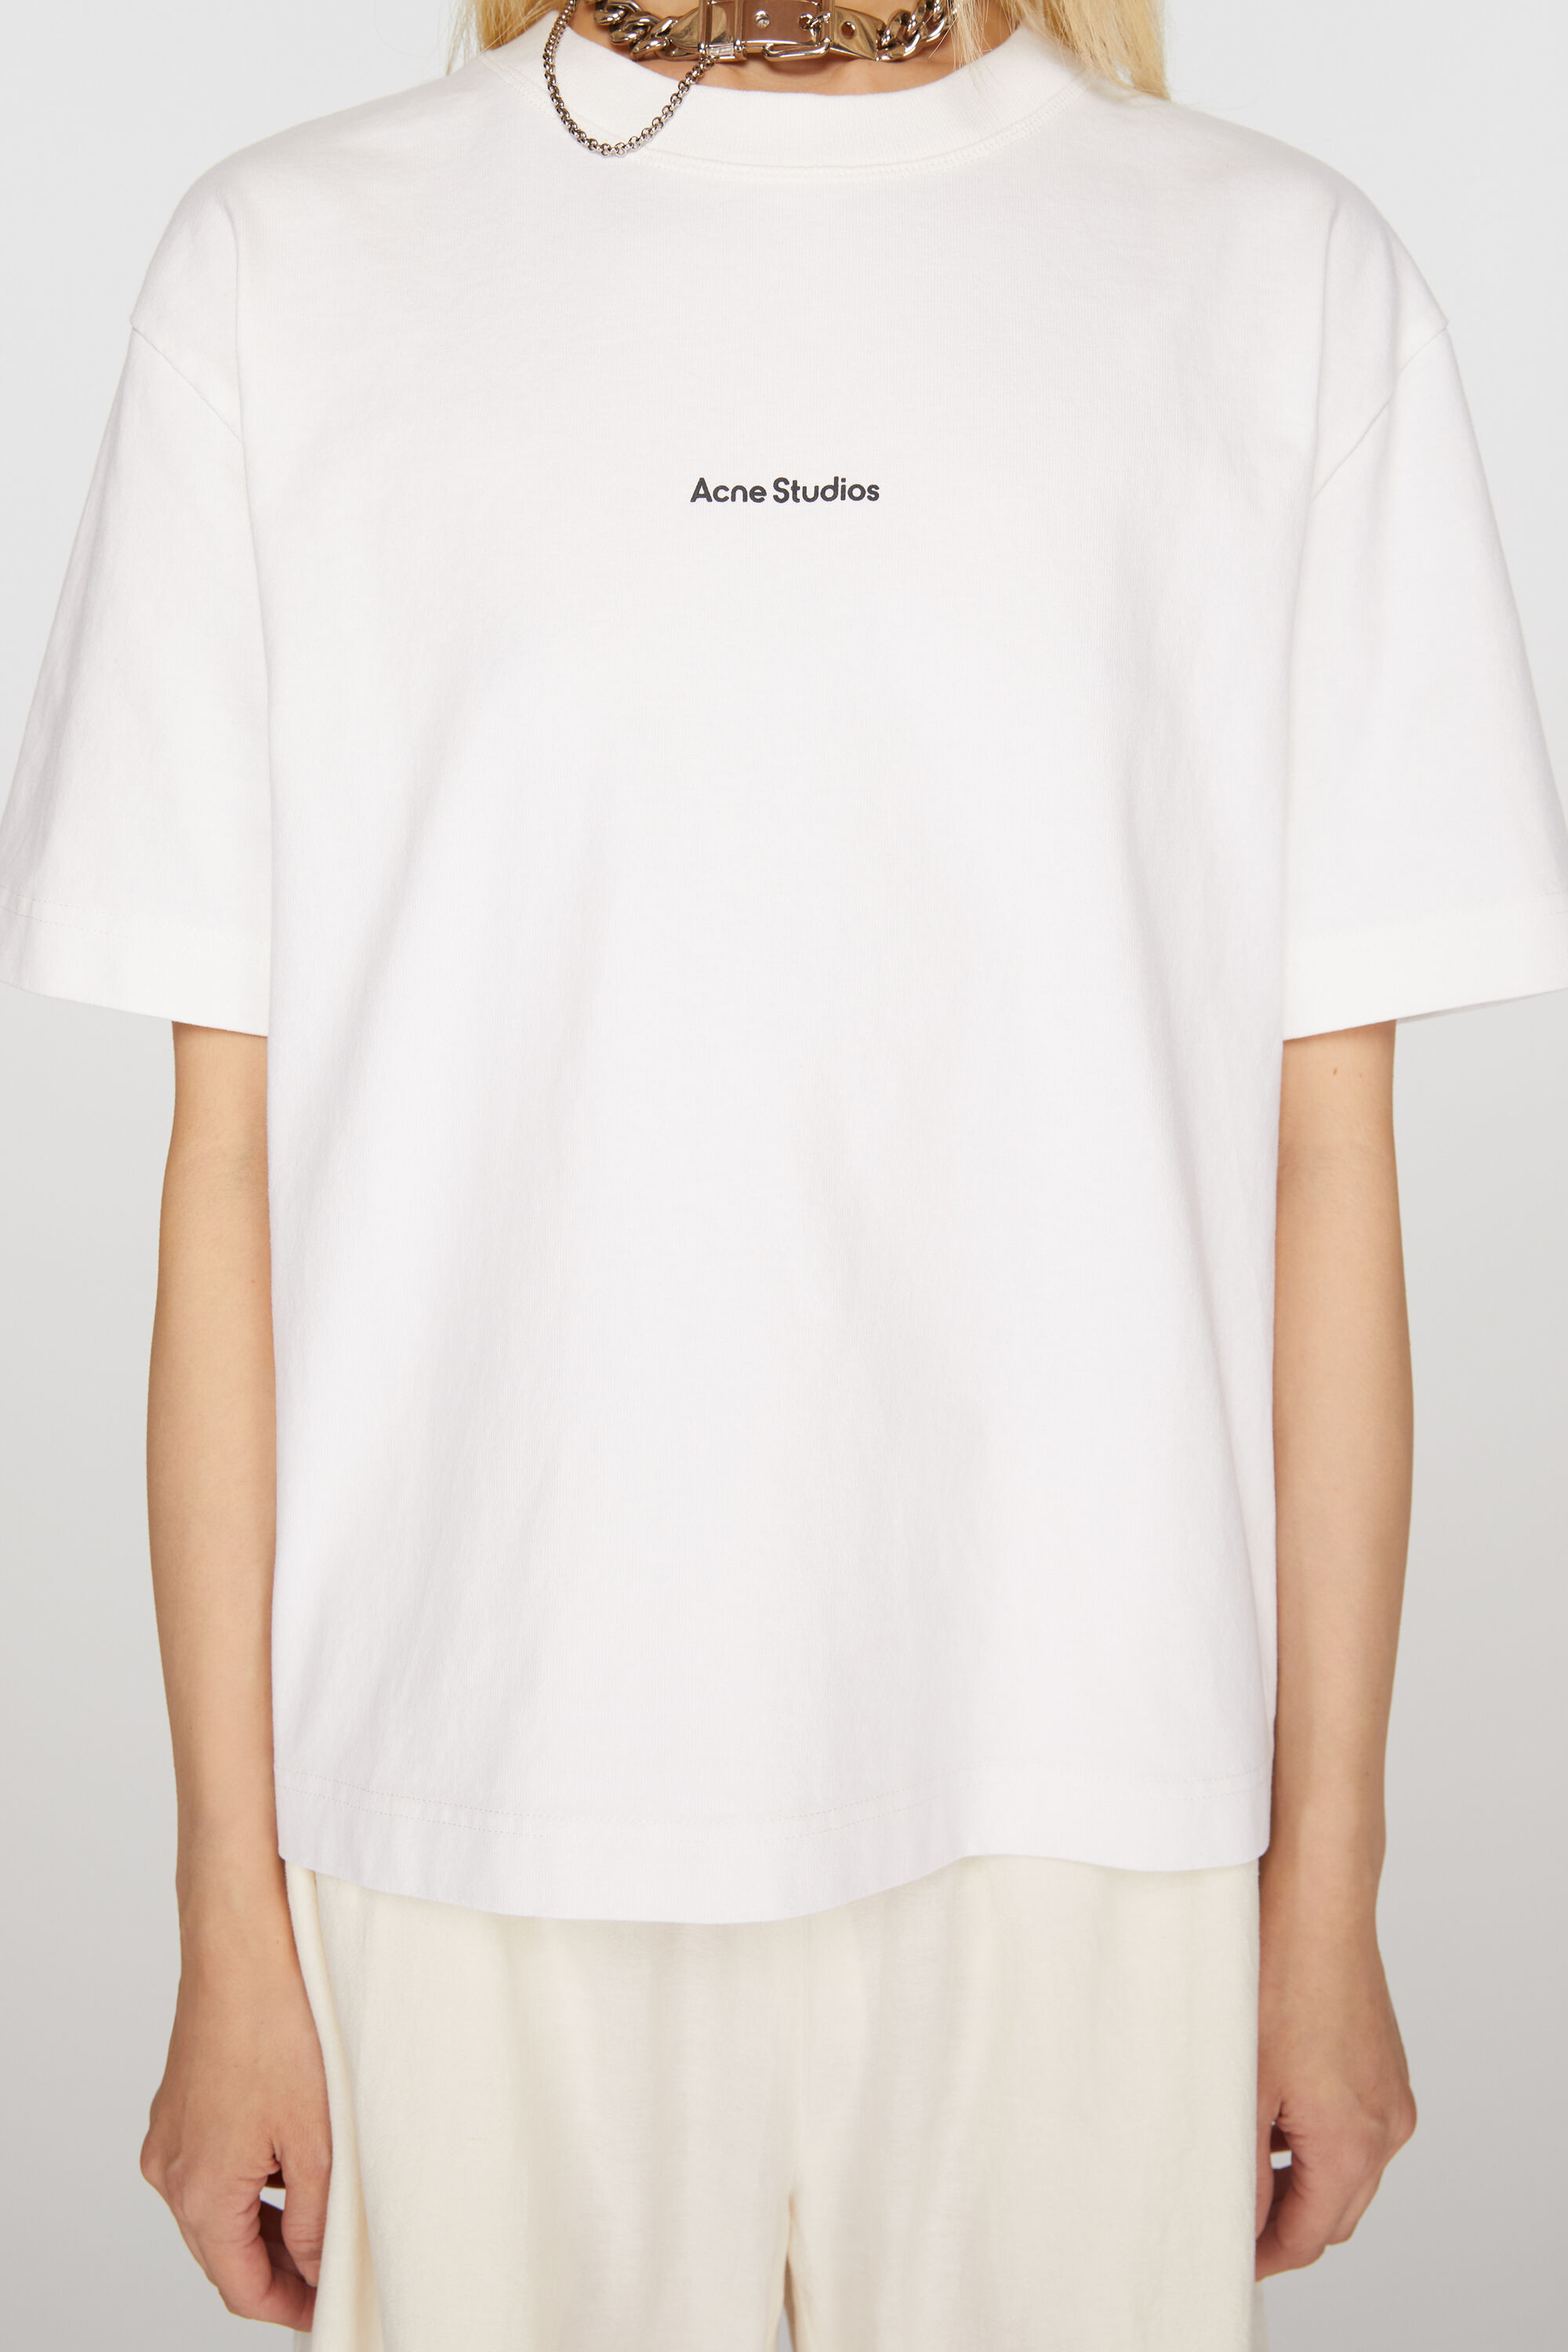 acne studios ホワイト ロゴ Tシャツ